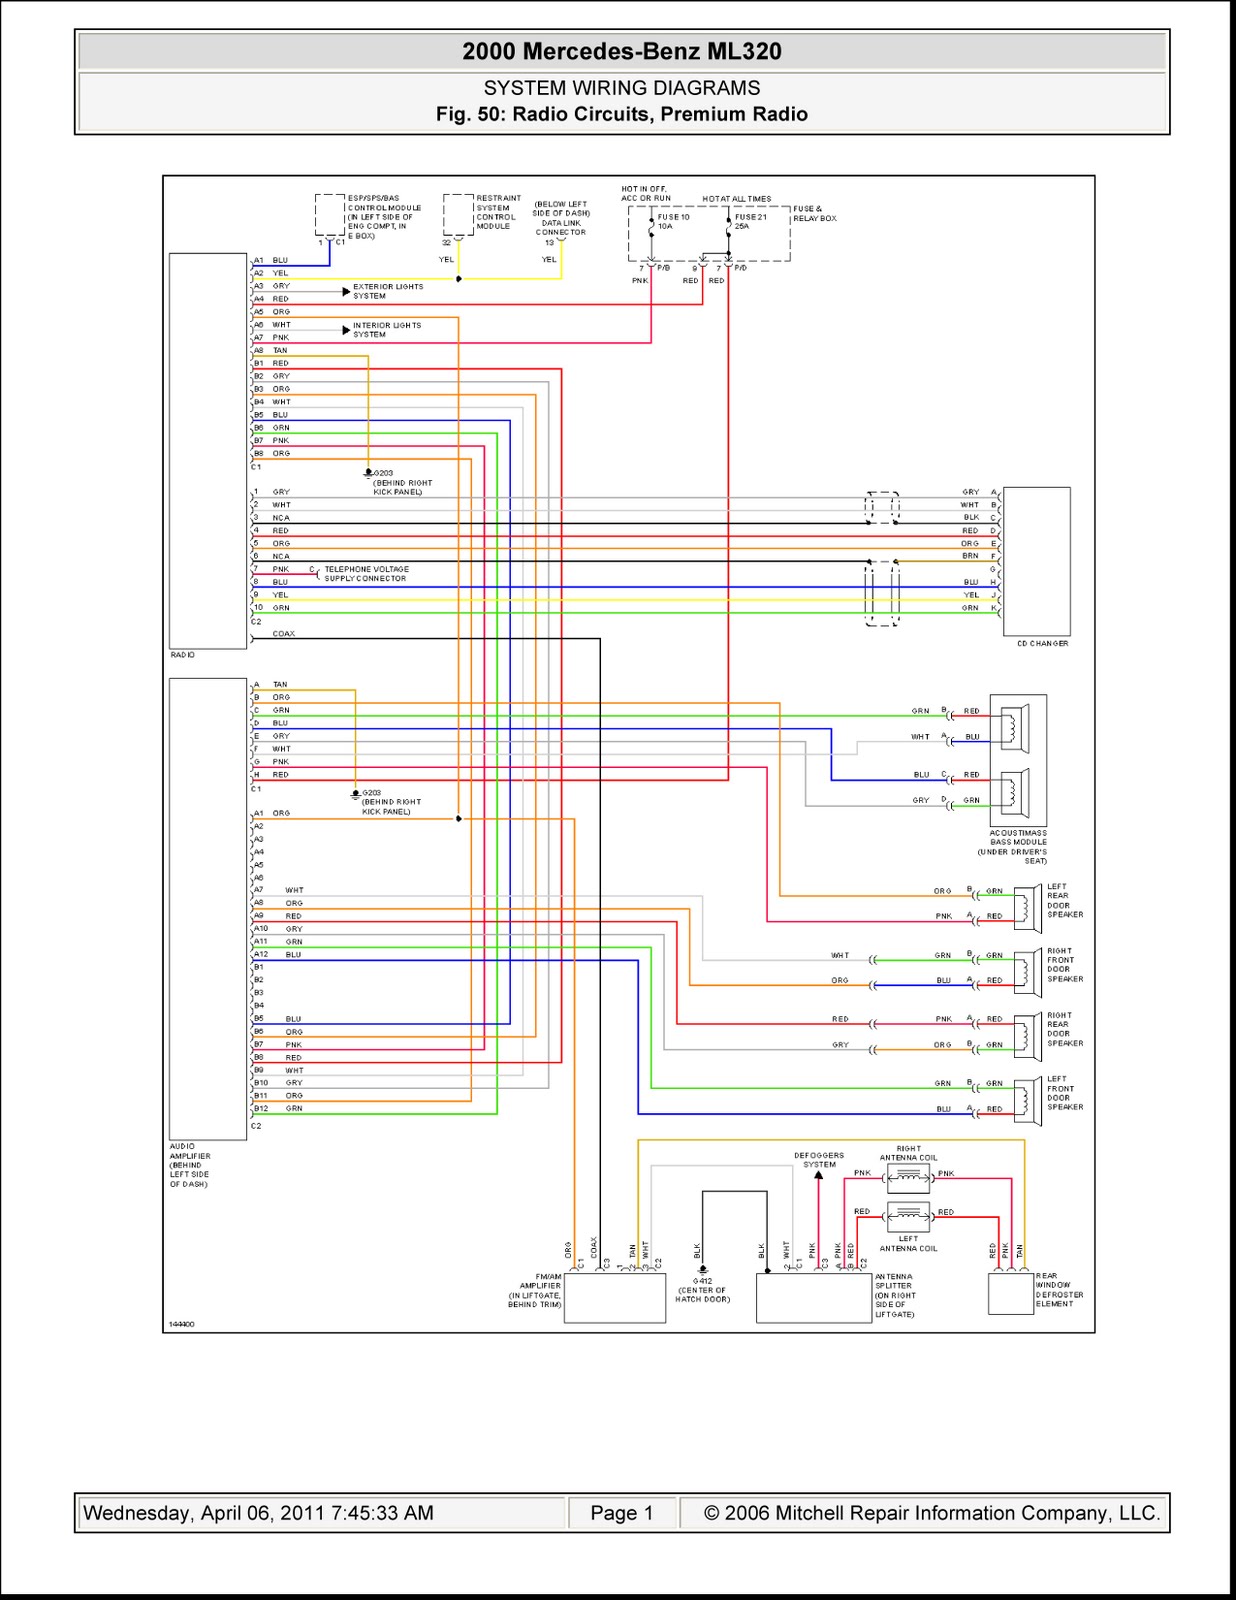 Wiring diagram mercedes ml320 #7